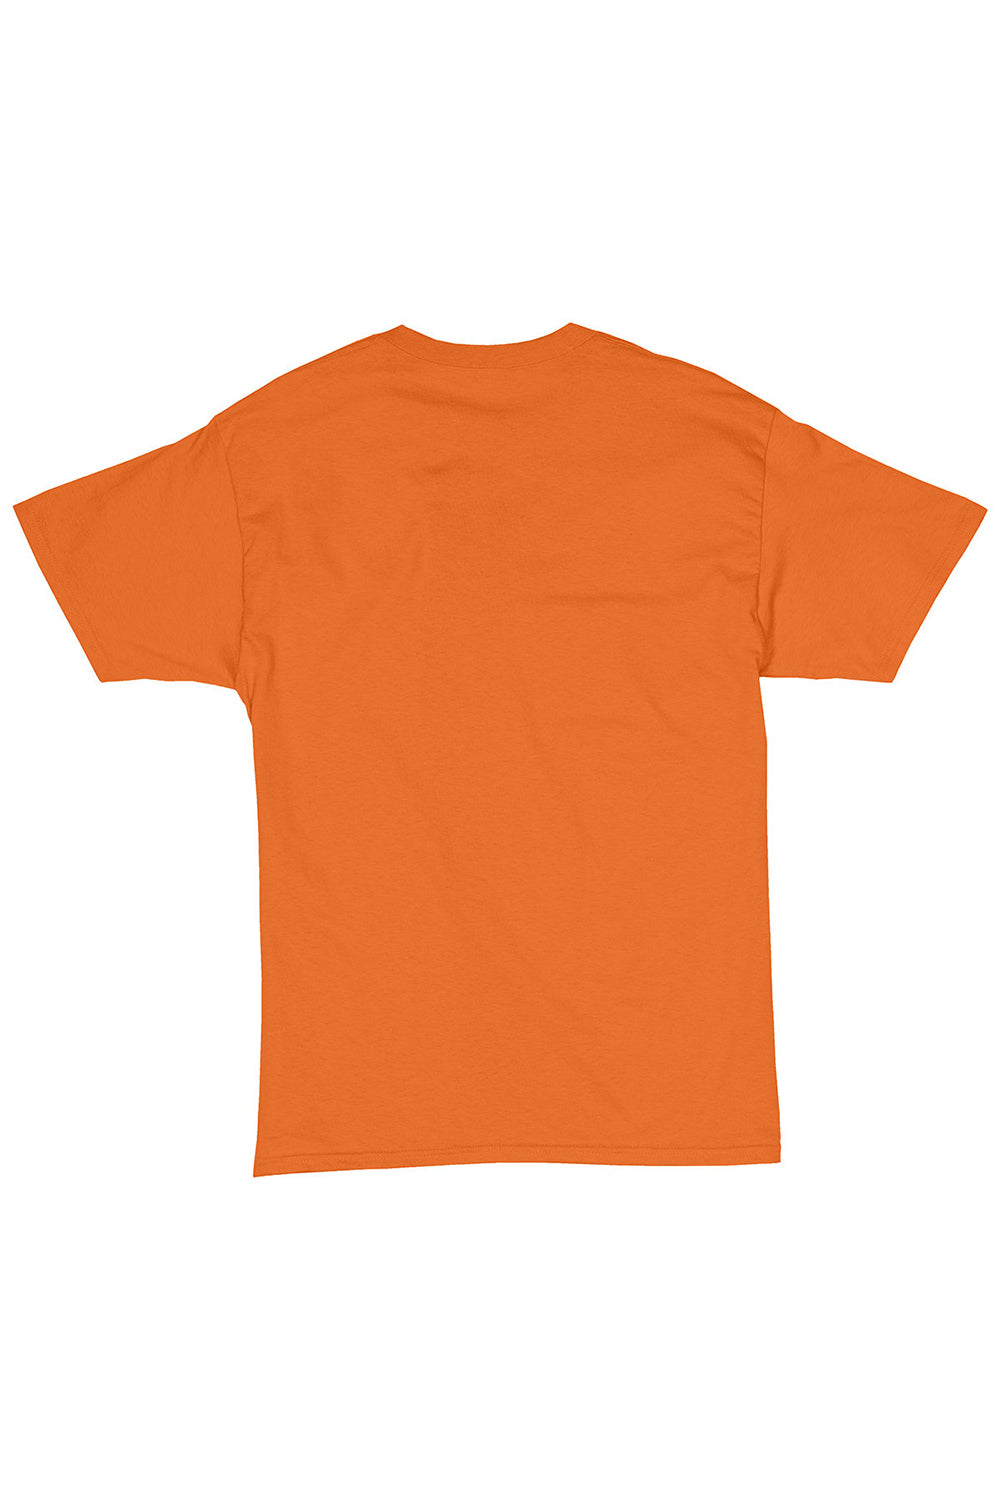 Hanes 5280 Mens ComfortSoft Short Sleeve Crewneck T-Shirt Safety Orange Flat Back